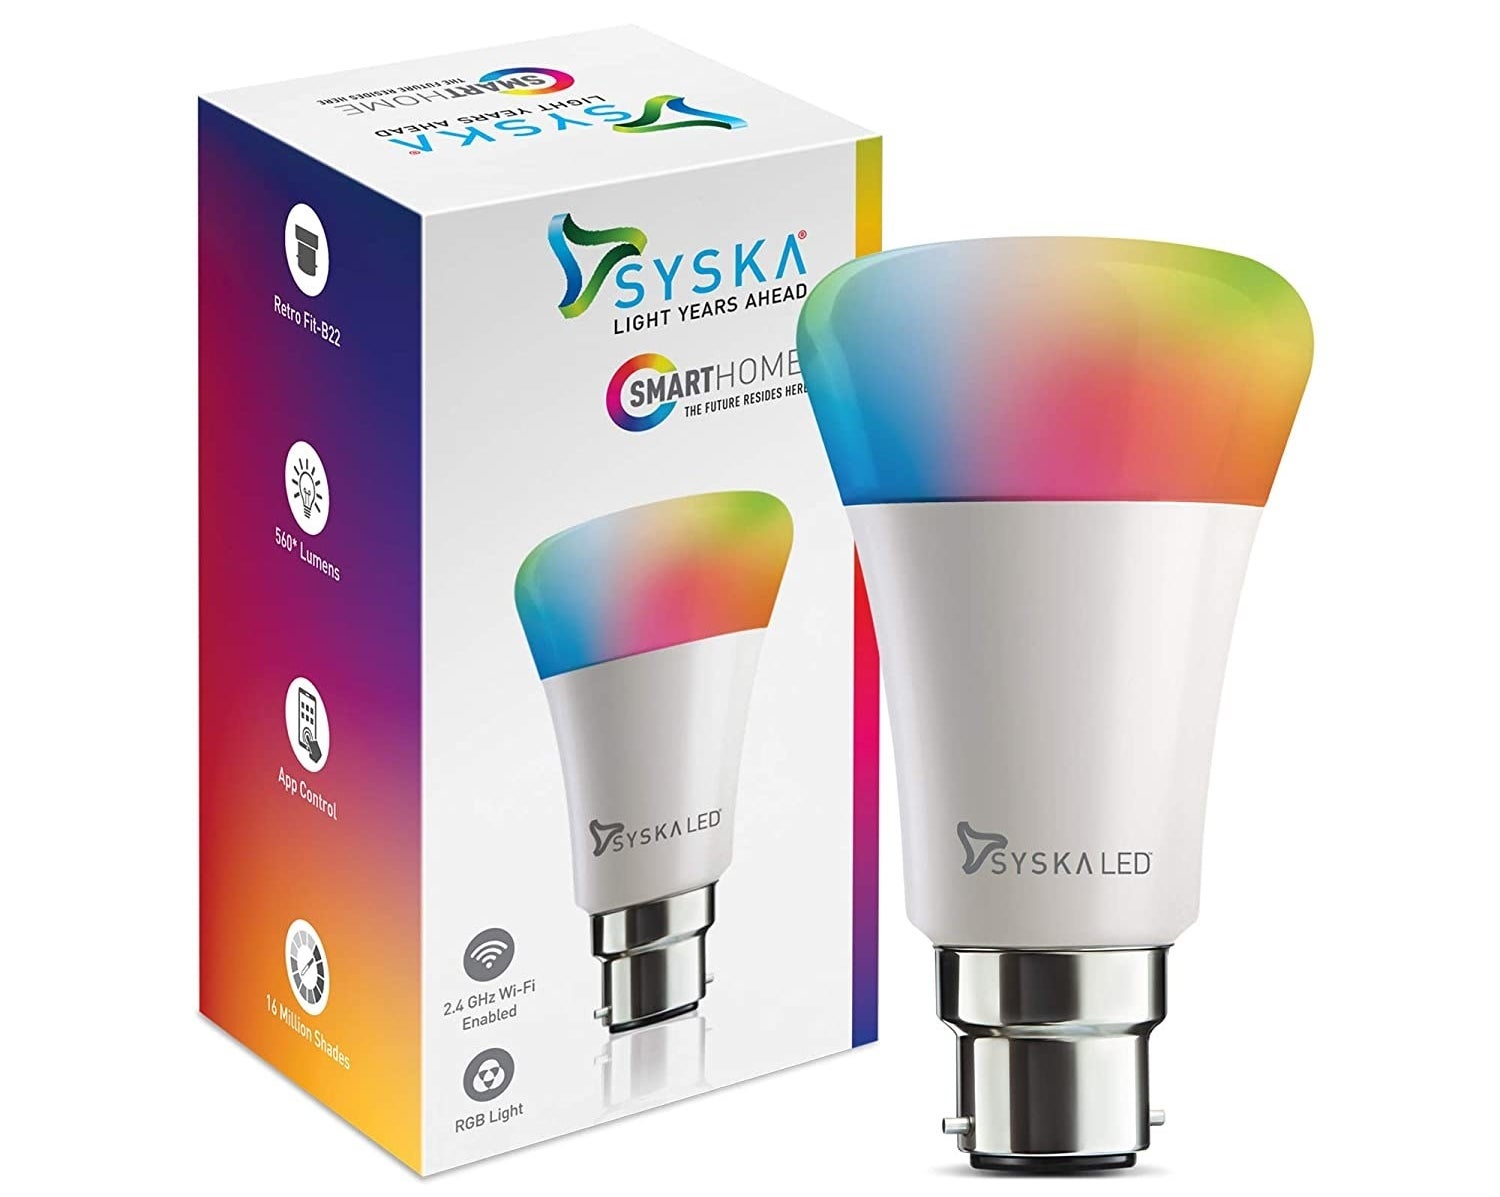 A Syska LED smart bulb next to its box.